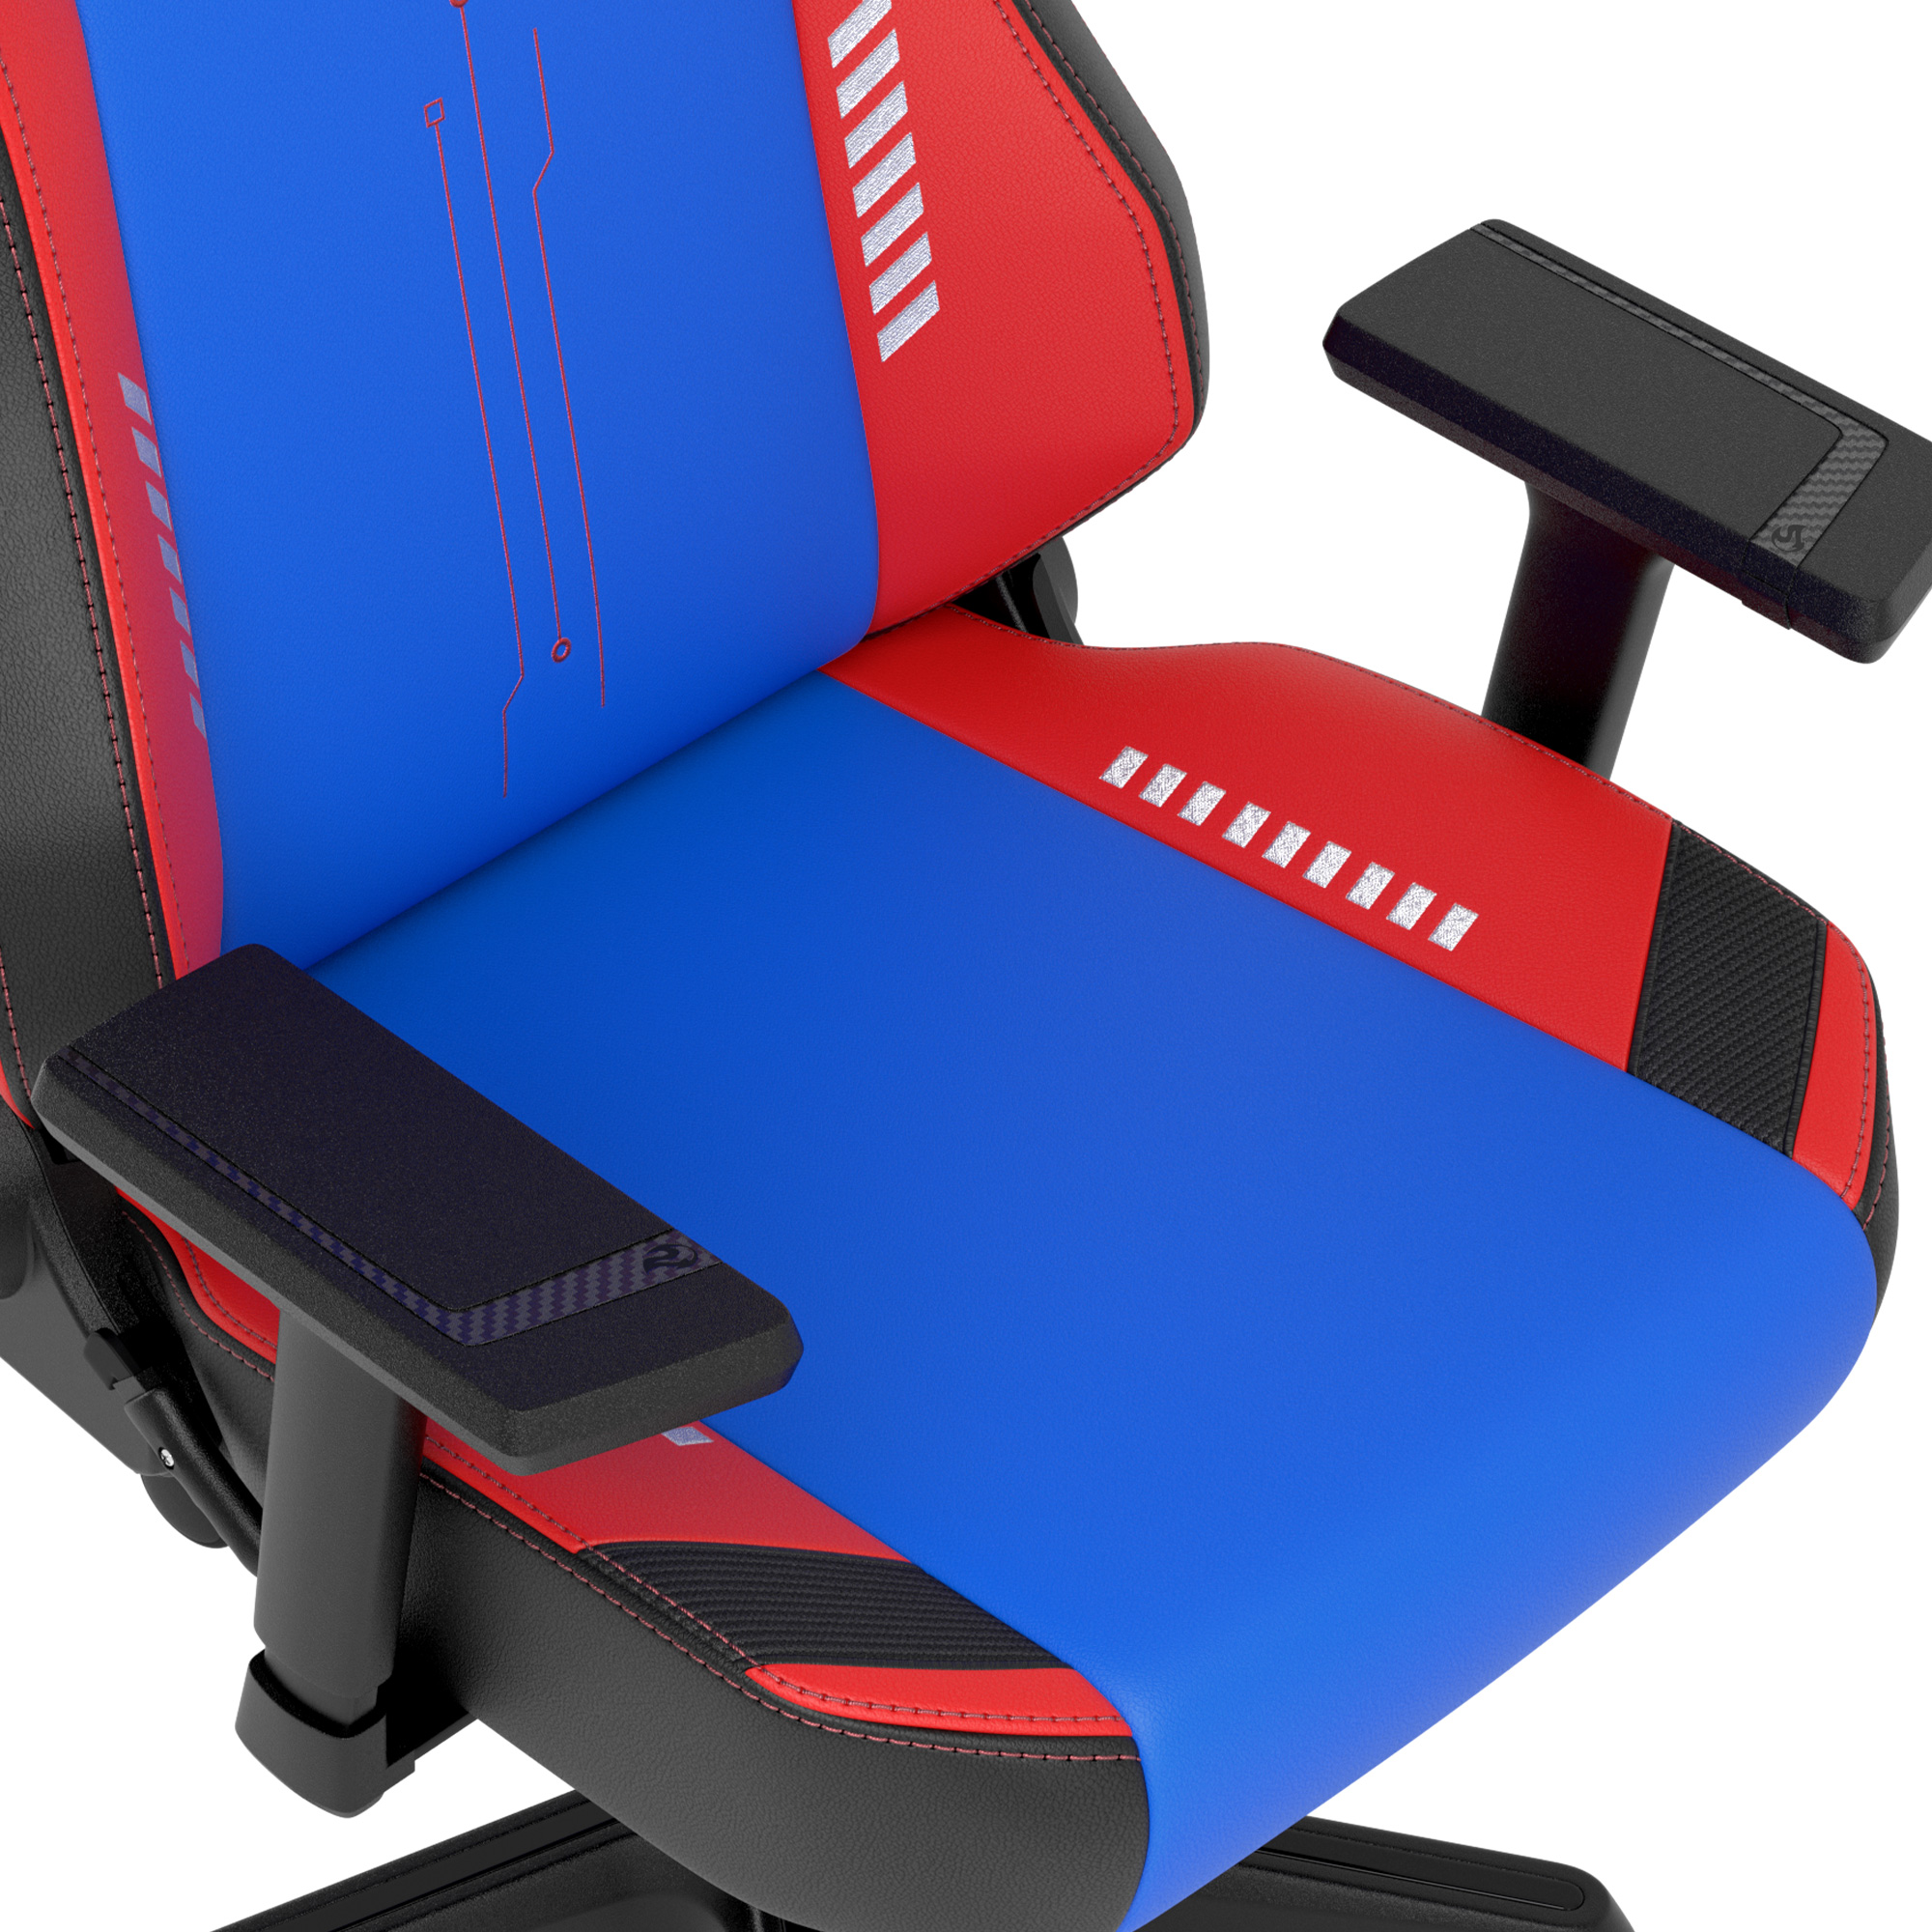 Nitro Concepts - X1000 Gaming Chair Transformers Optimus Prime Edition